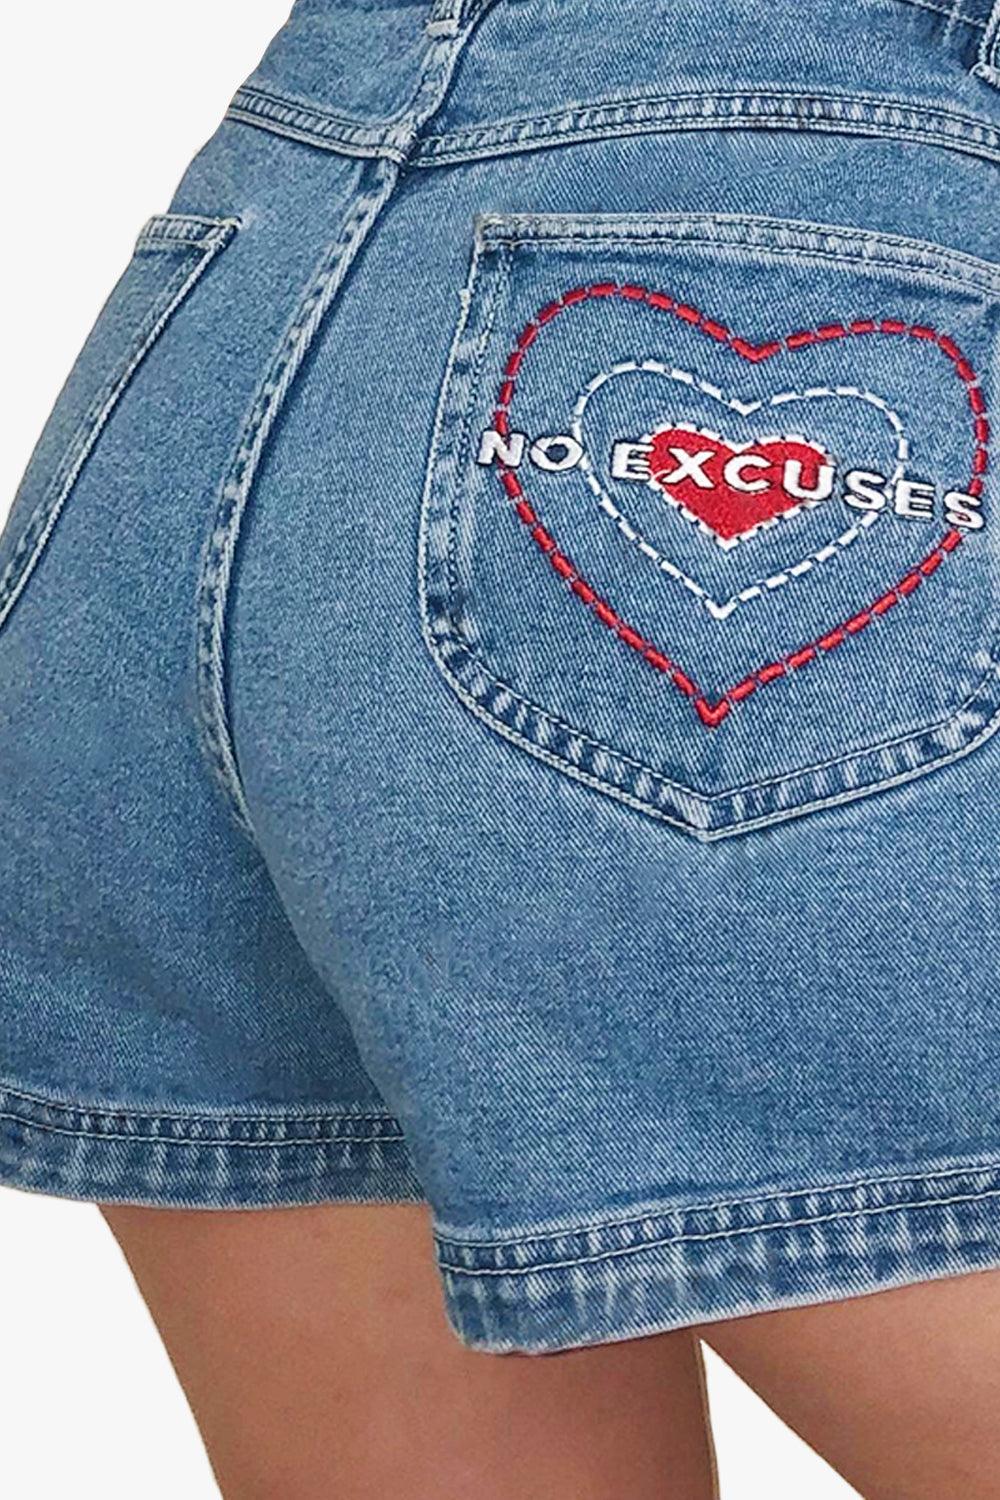 No Excuses Heart Denim Shorts - Aesthetic Clothes Shop